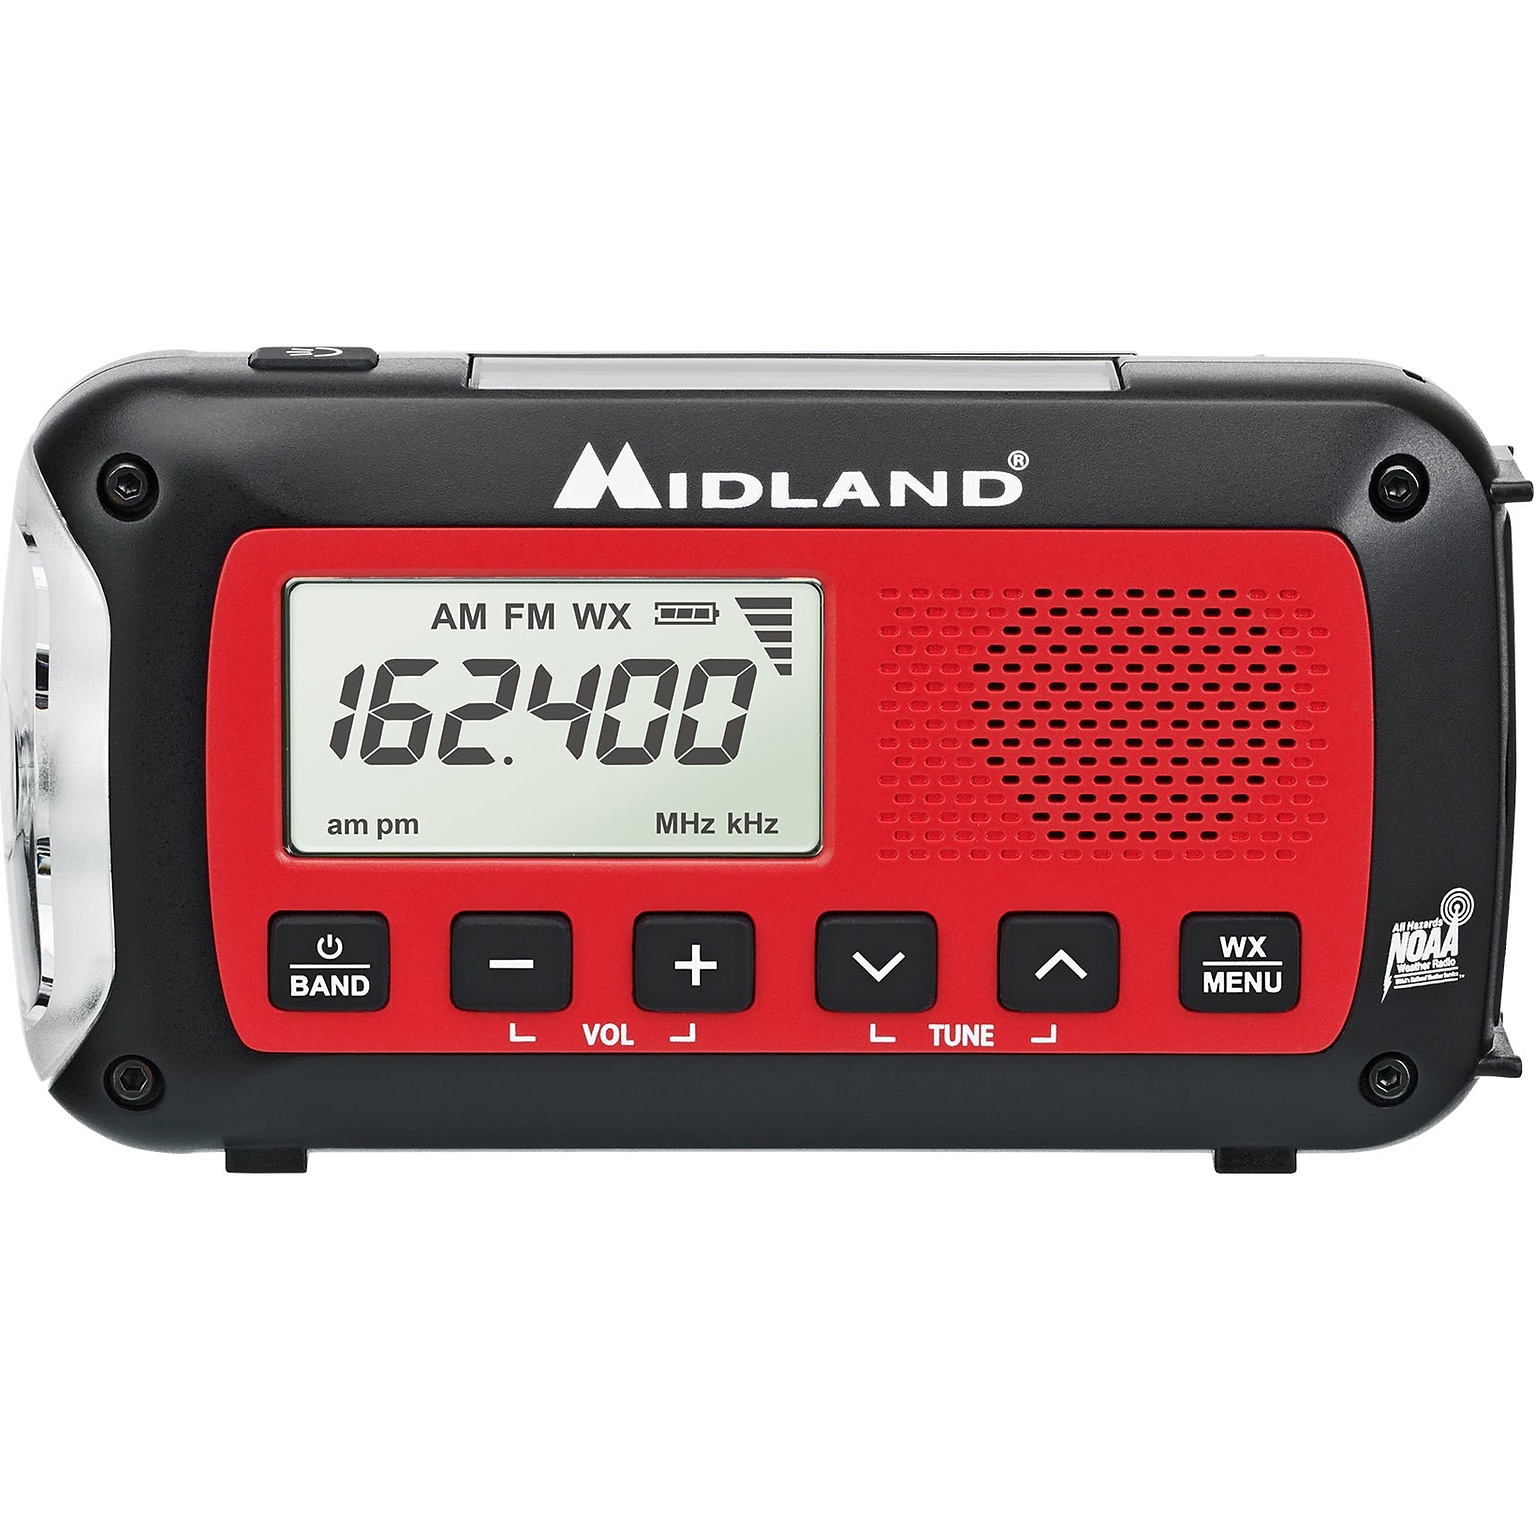 MIDLAND RADIO Wireless Emergency Crank Radio, Black/Red (ER40)